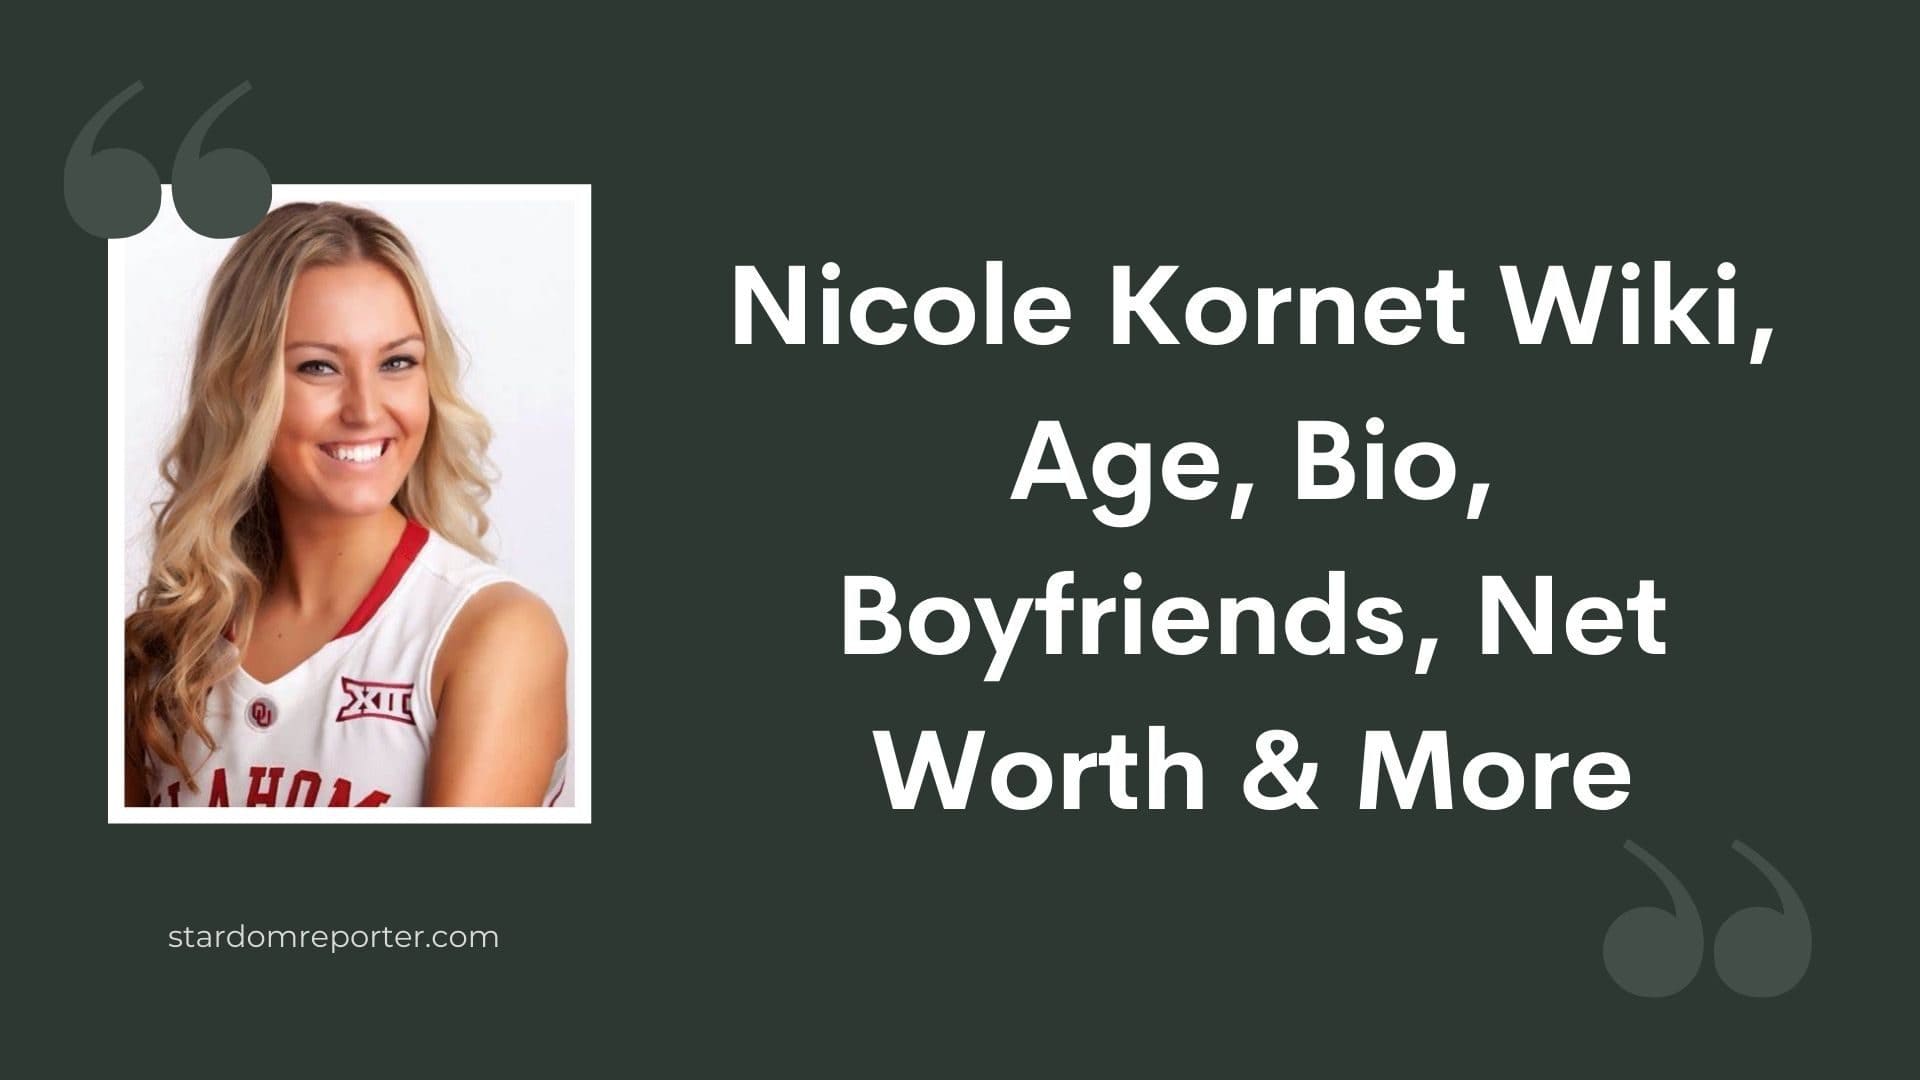 Nicole Kornet Wiki, Age, Bio, Boyfriends, Net Worth & More - 11